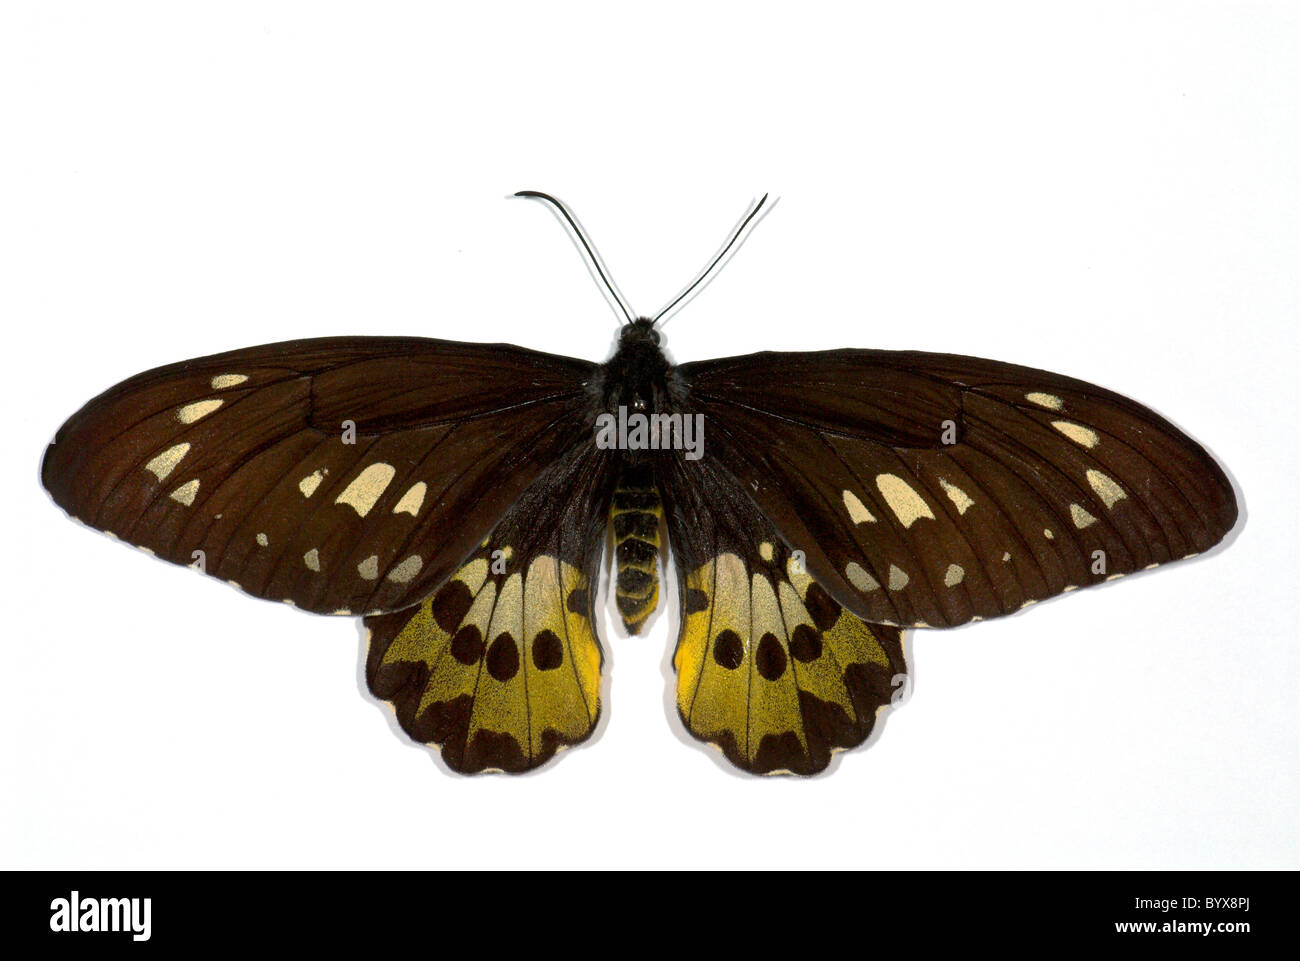 Rothschilds Birdwing Butterfly Ornithoptera rothschildi Indonesia Stock Photo